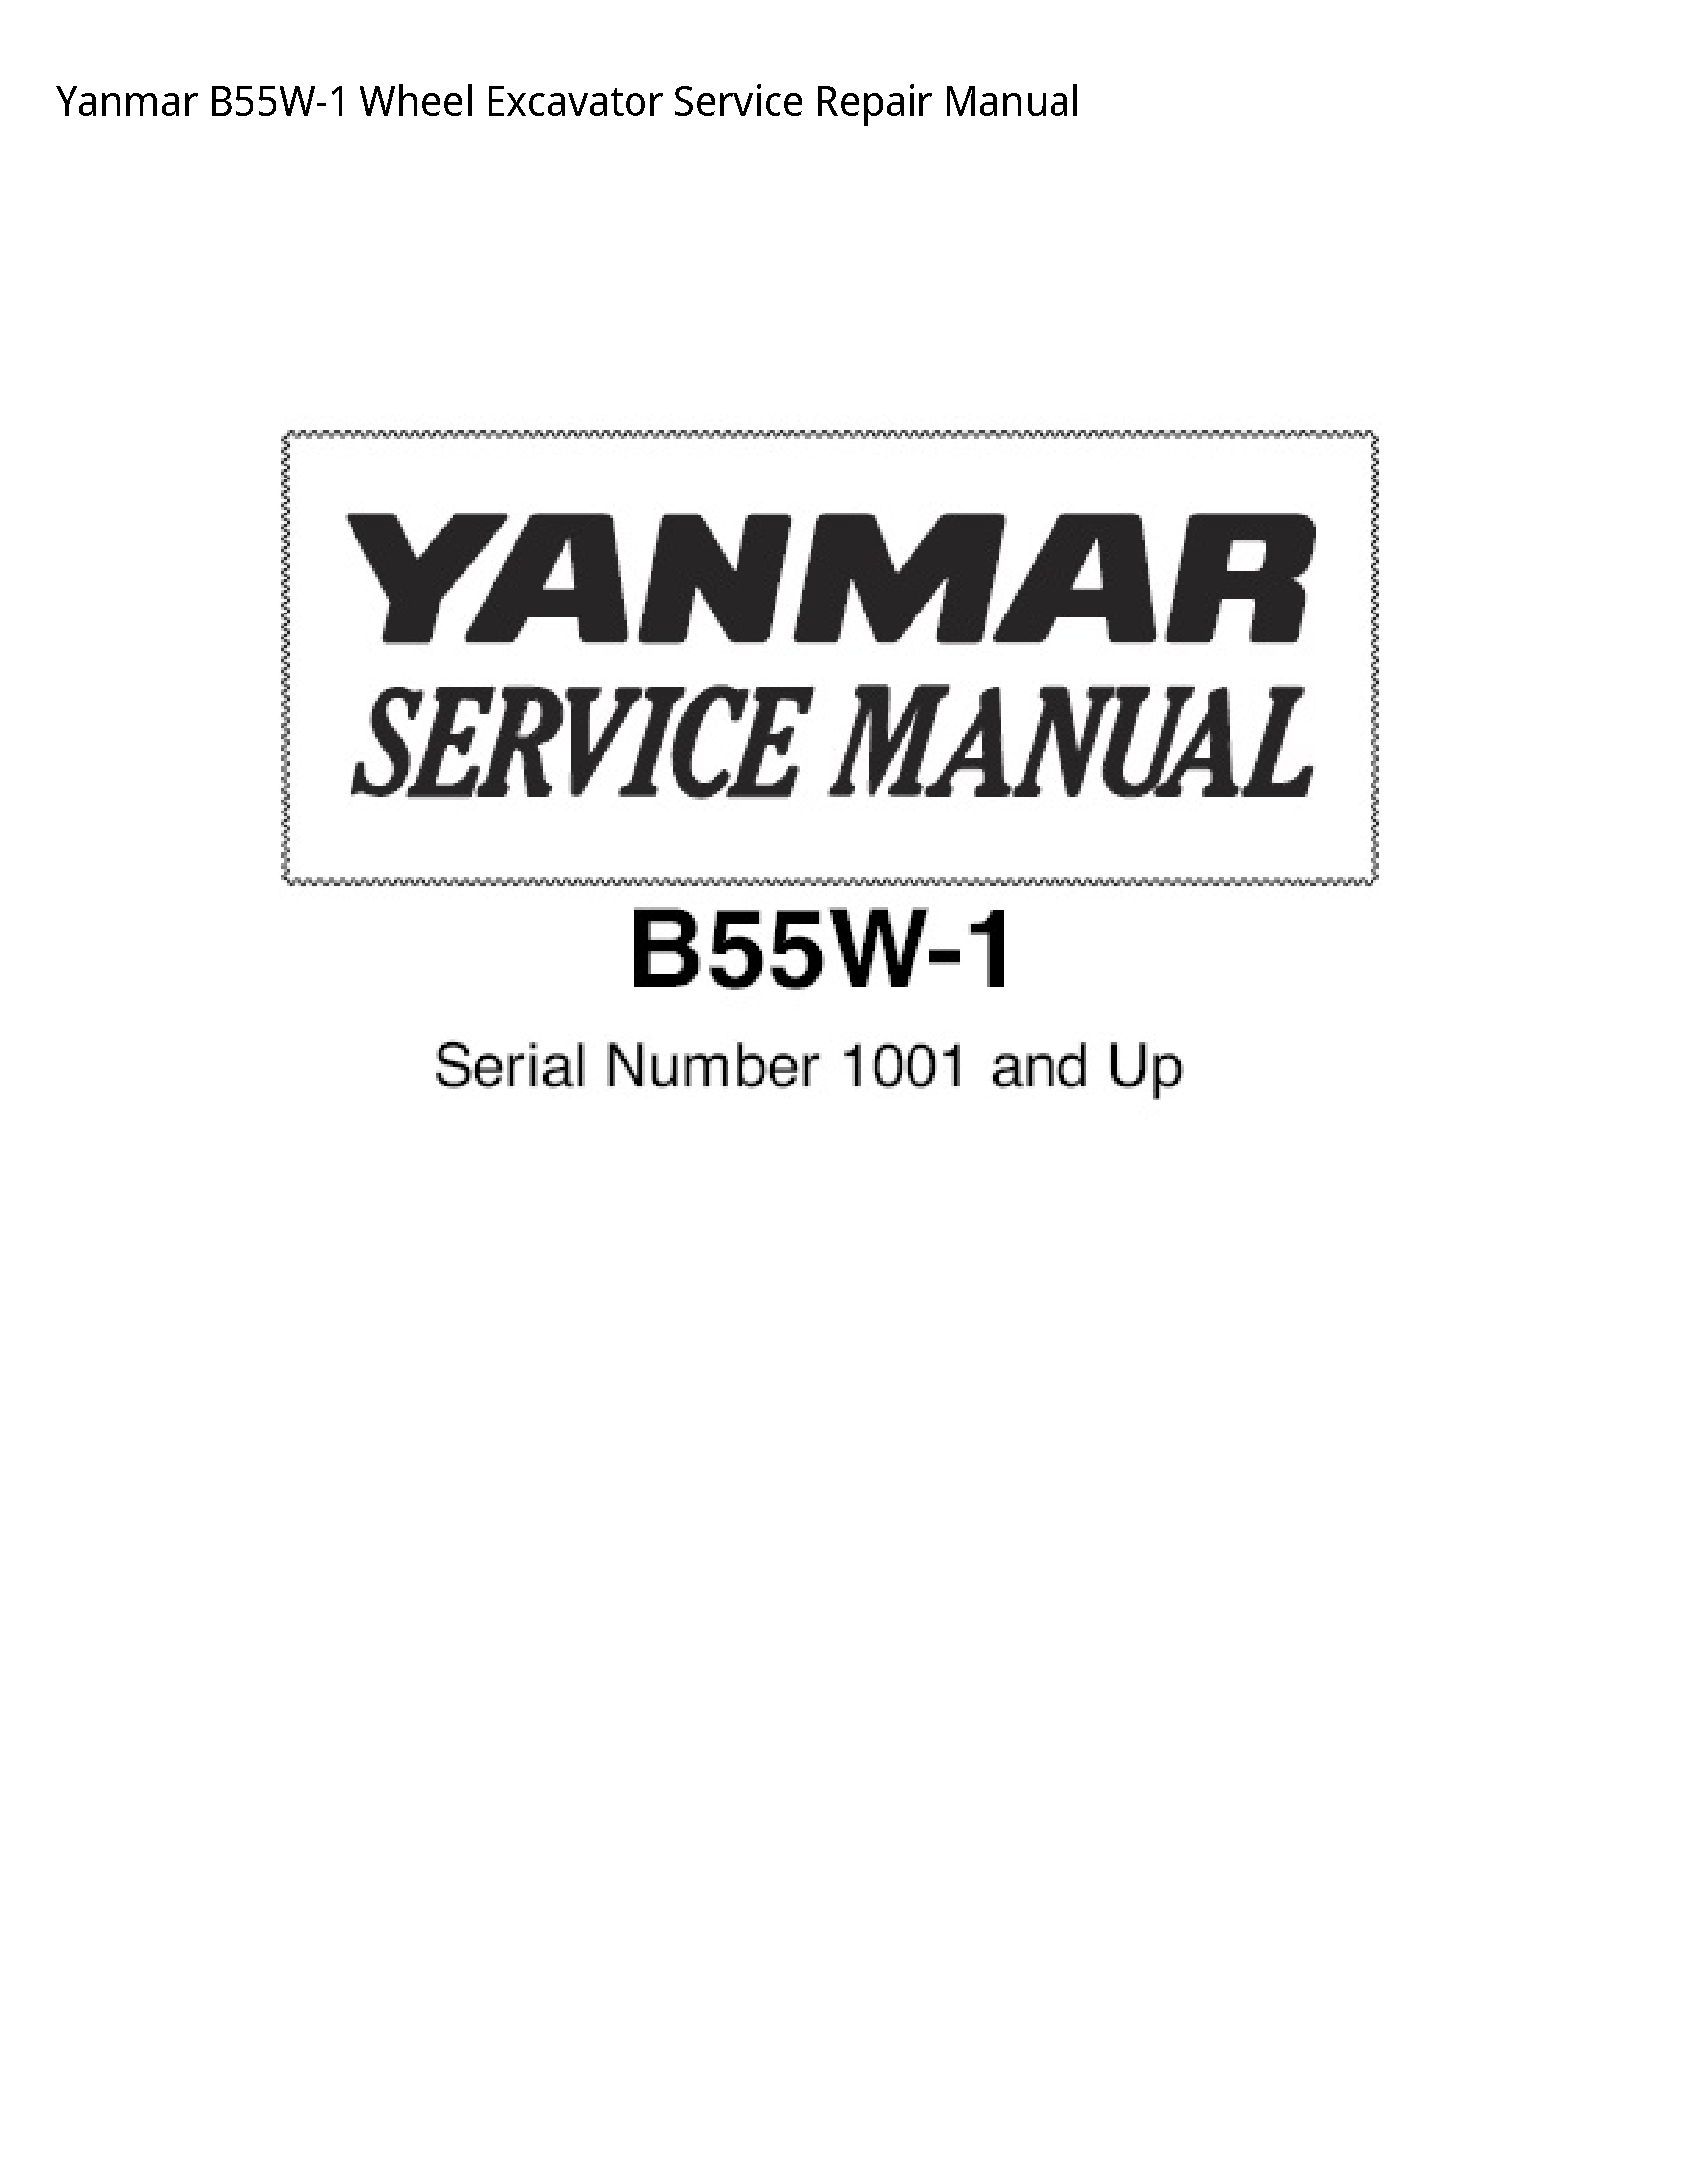 Yanmar B55W-1 Wheel Excavator manual